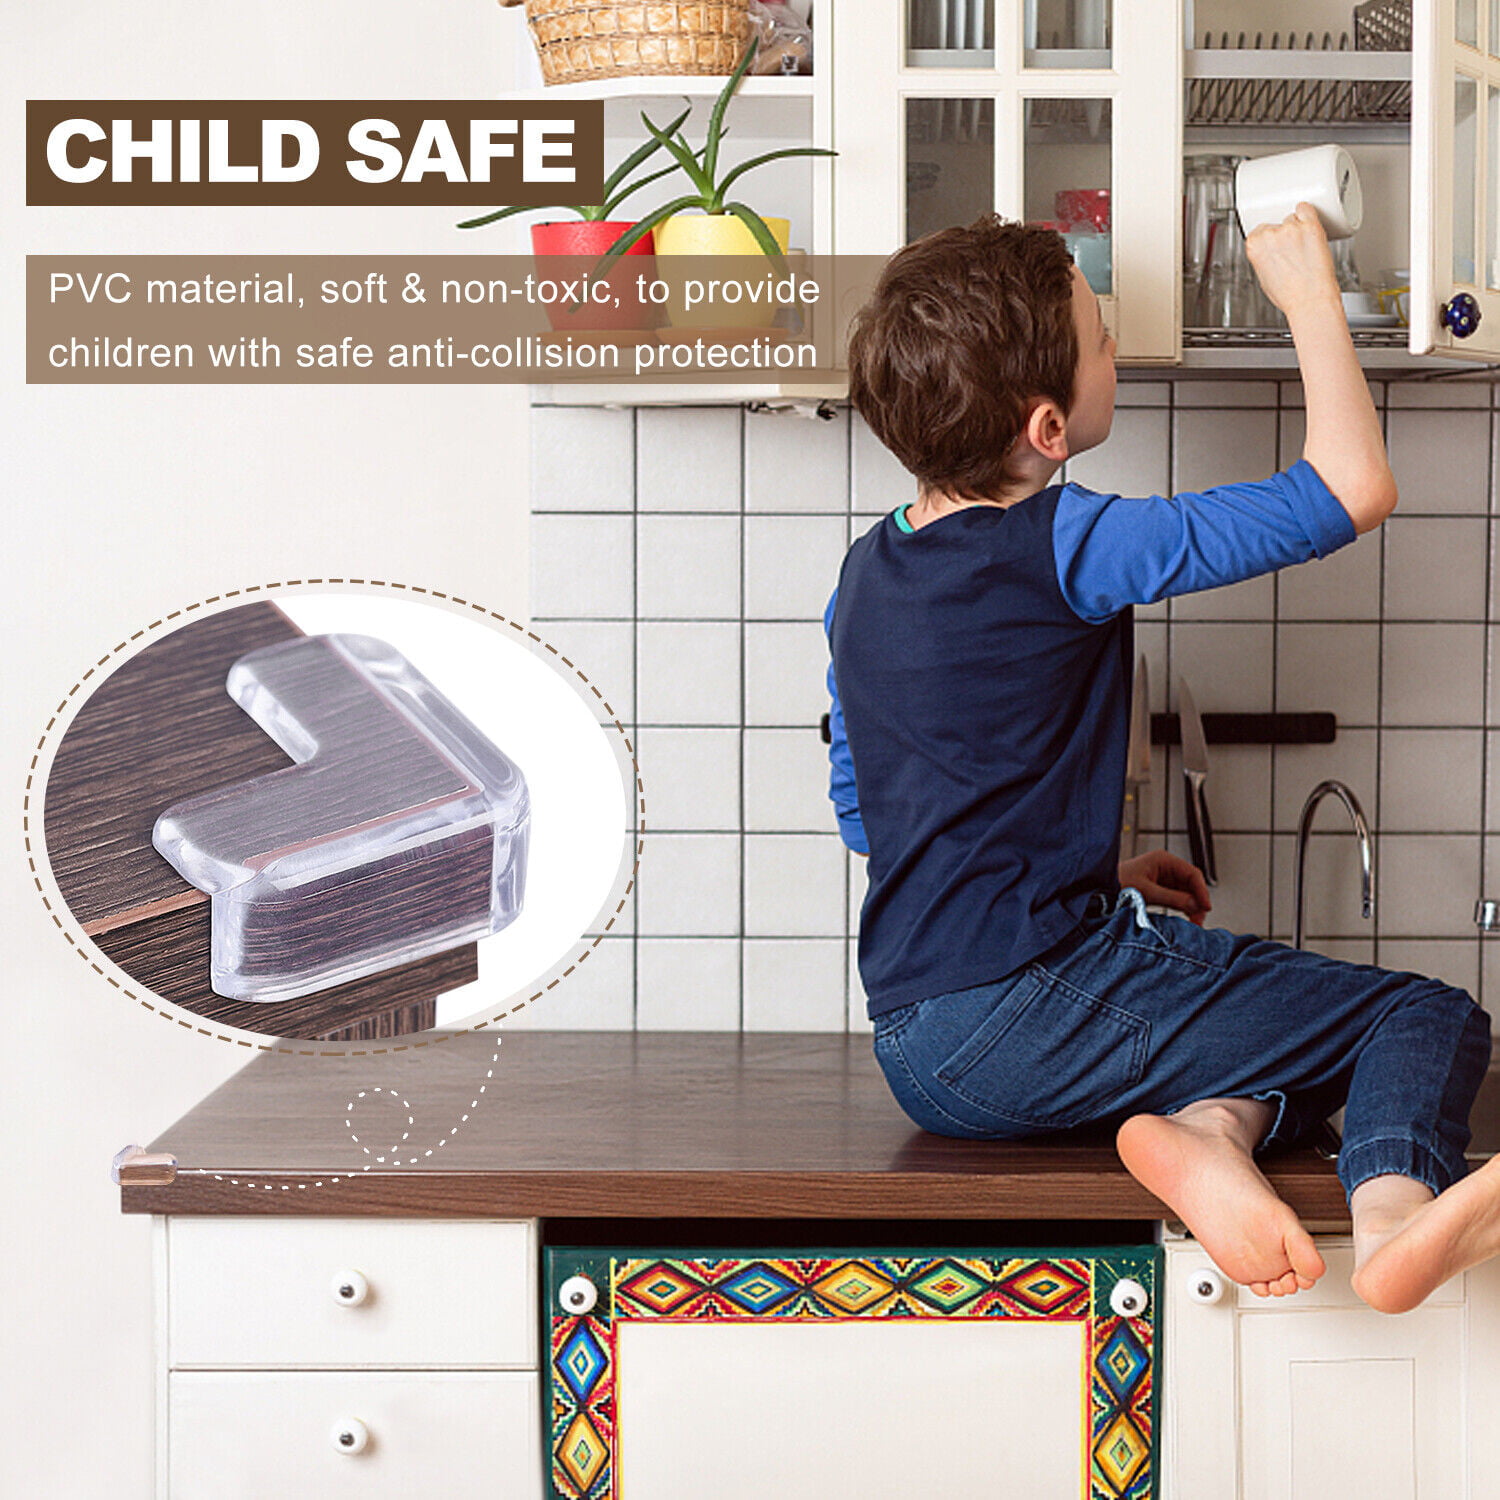 4pcs Silicone Table Corner Protector – Momma's Shop